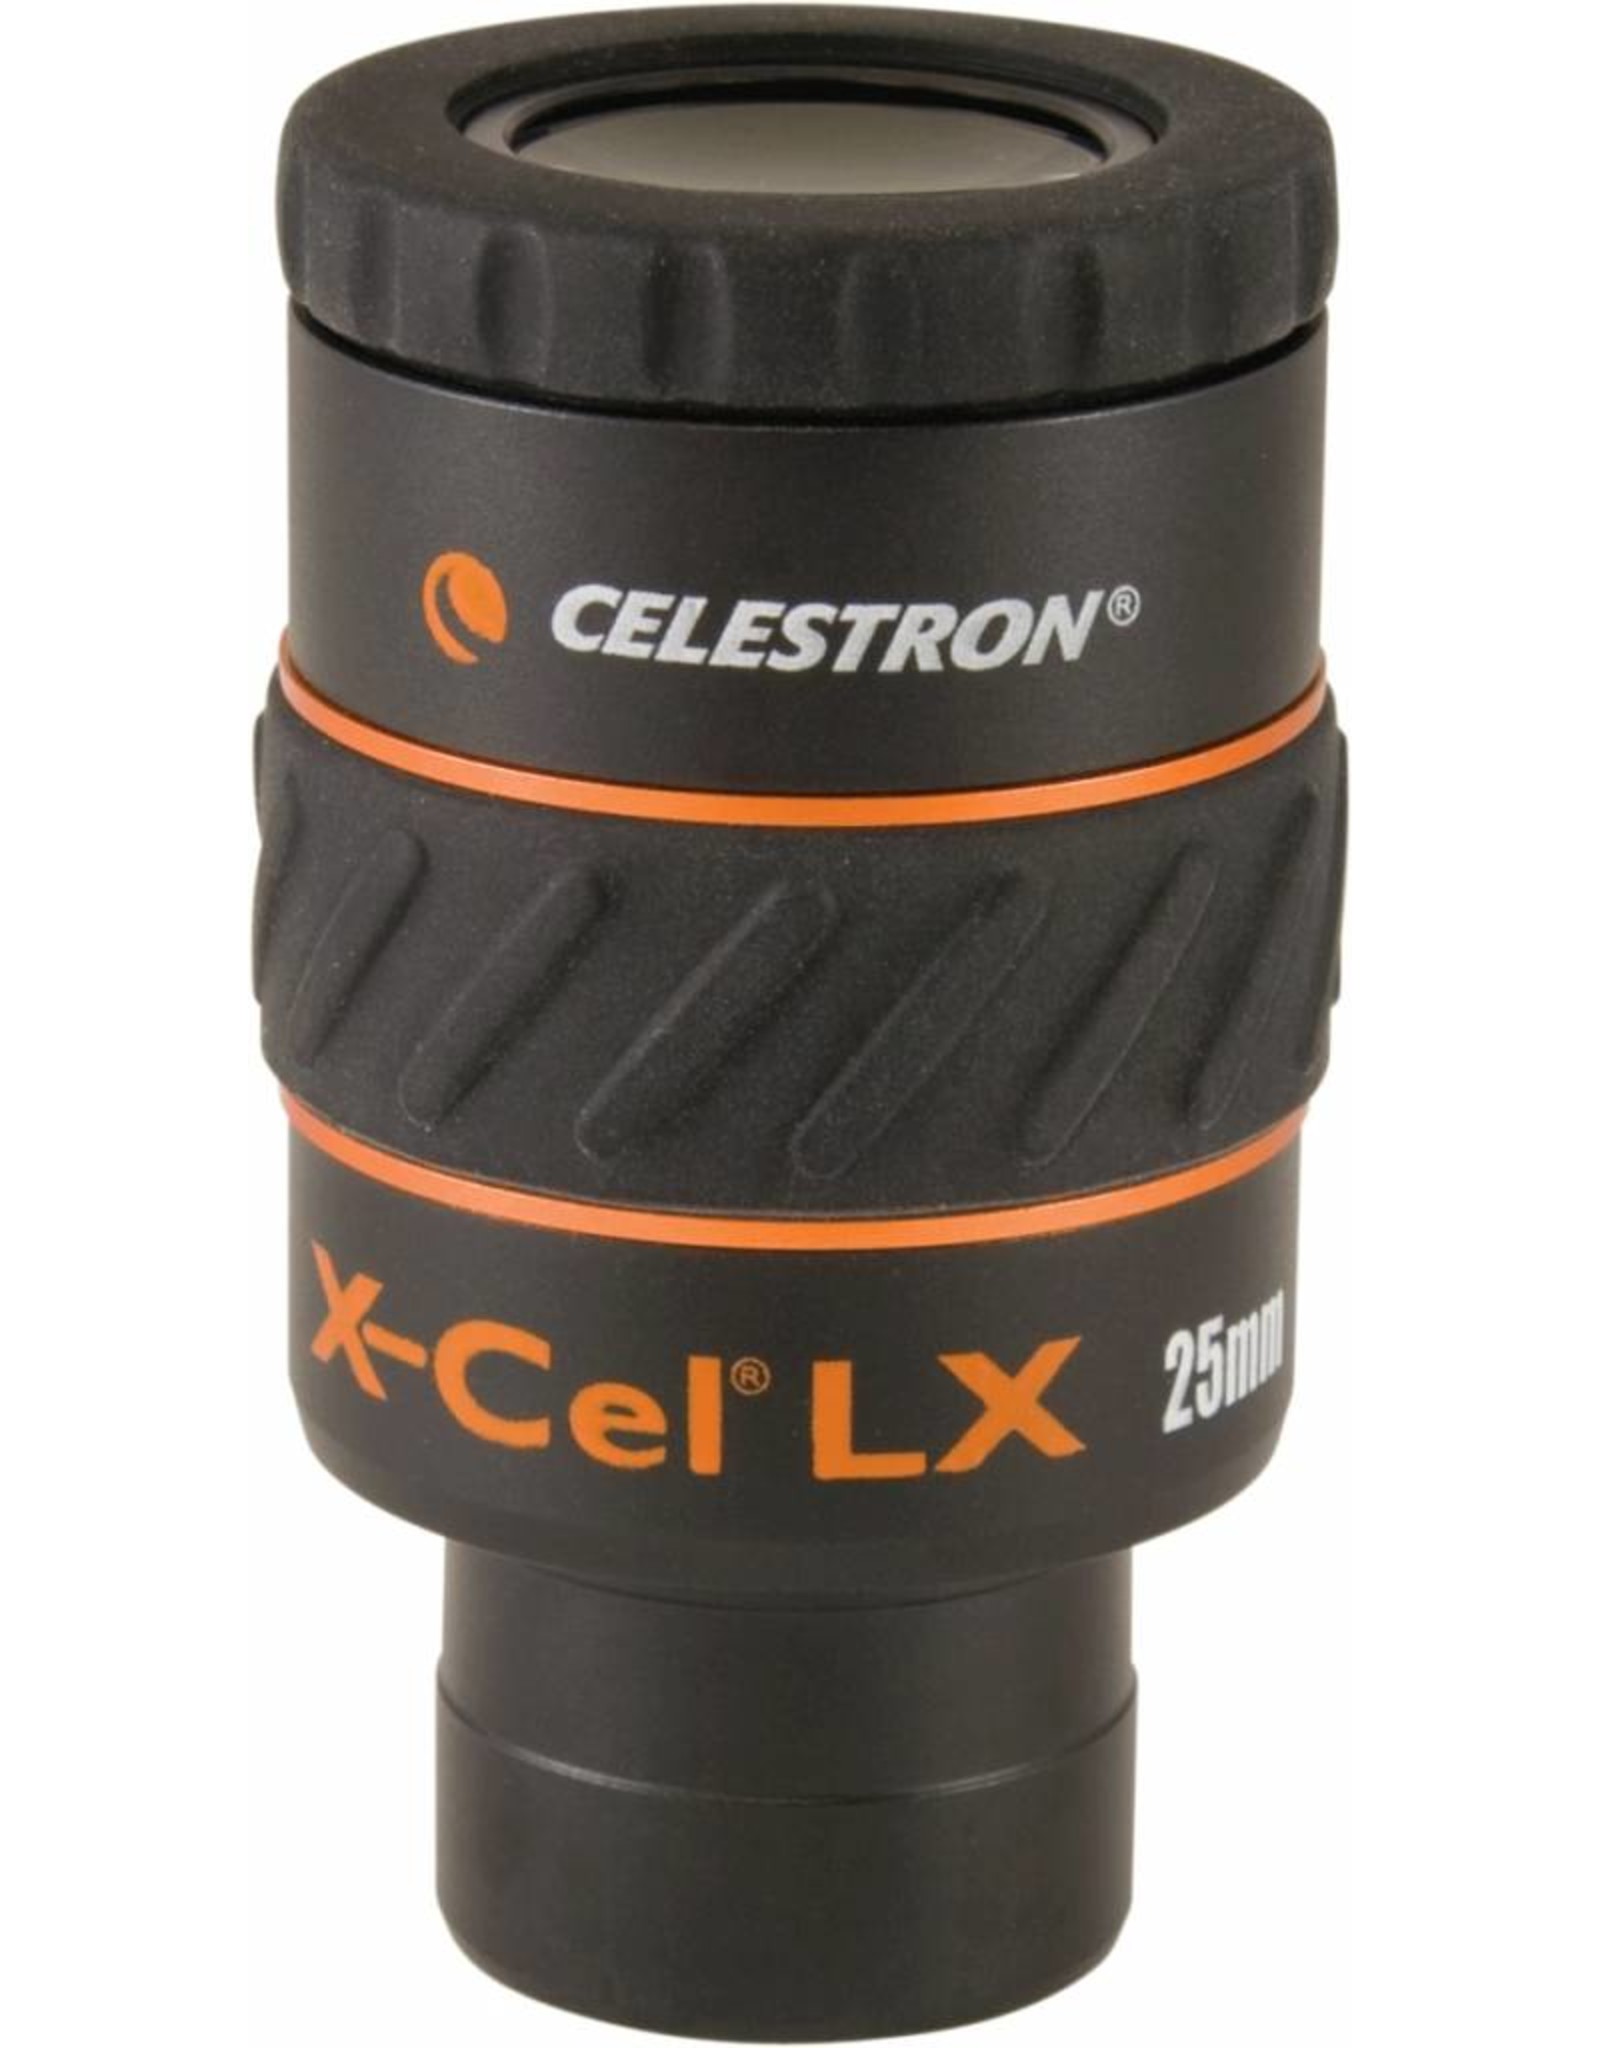 Celestron Celestron X-Cel LX 25 mm Eyepiece